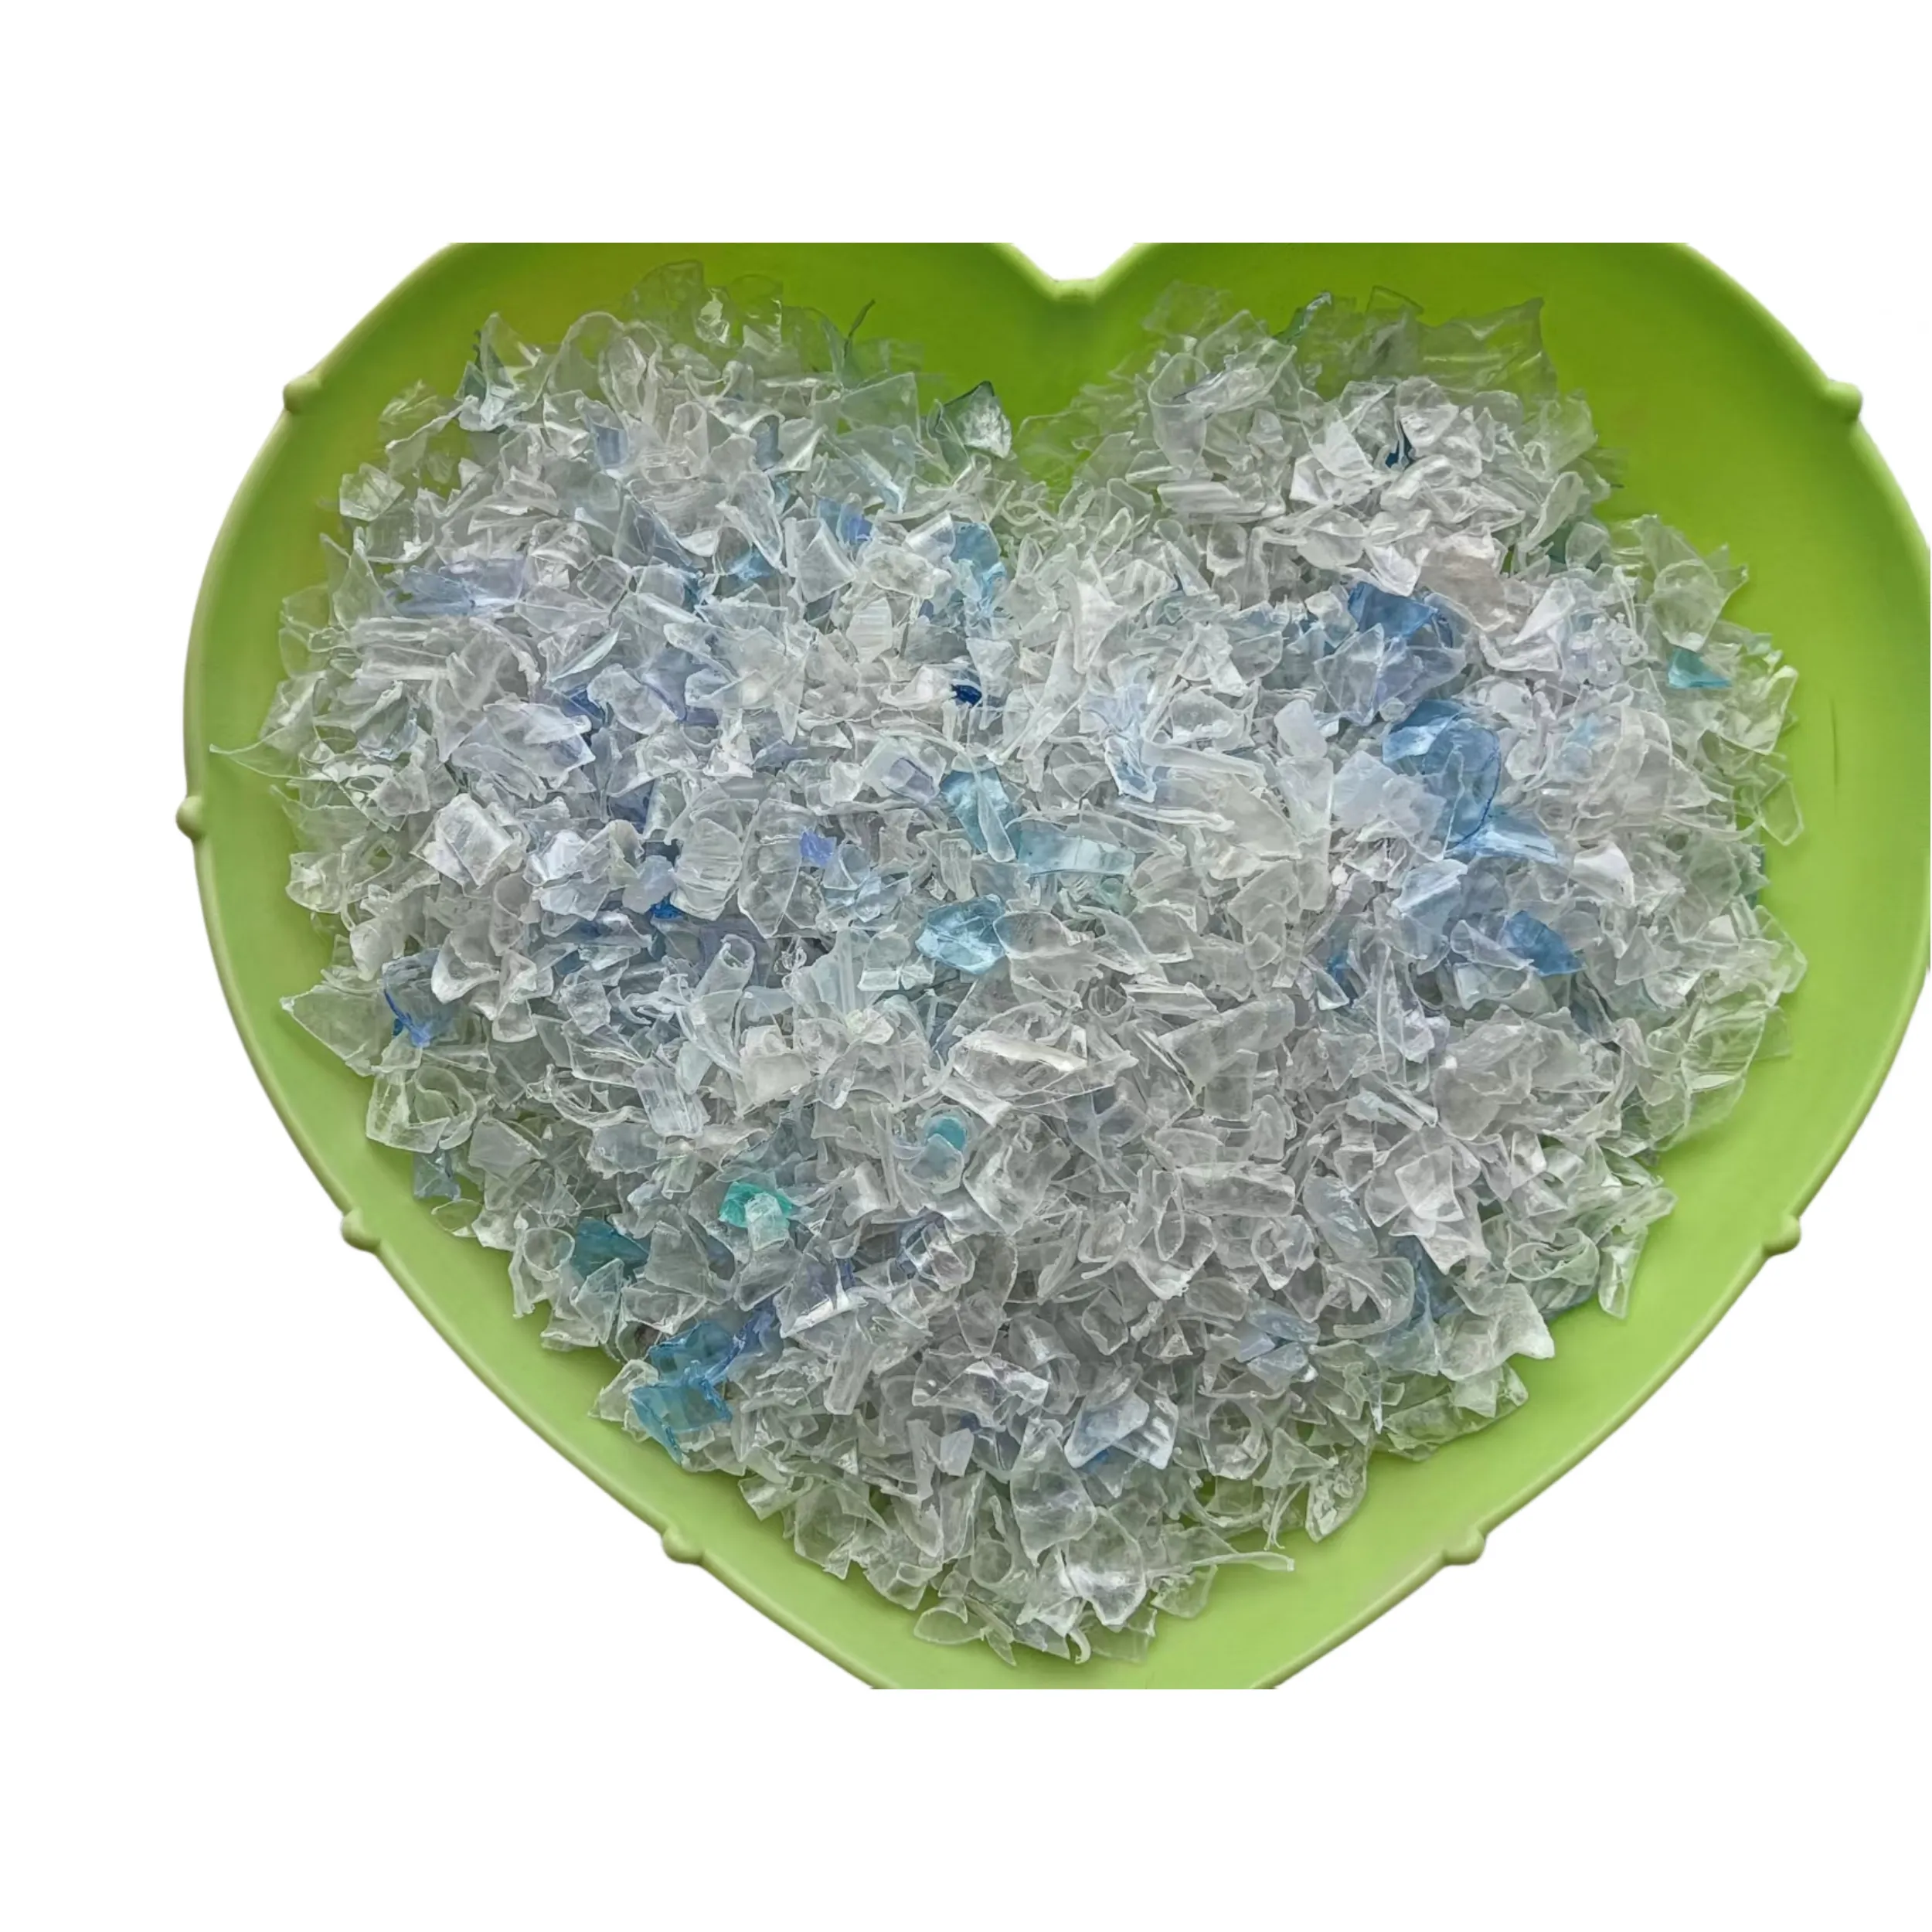 PET 폴리에틸렌 테레프탈레이트 재활용 PET 플라스틱 과립 공급 업체 저렴한 가격